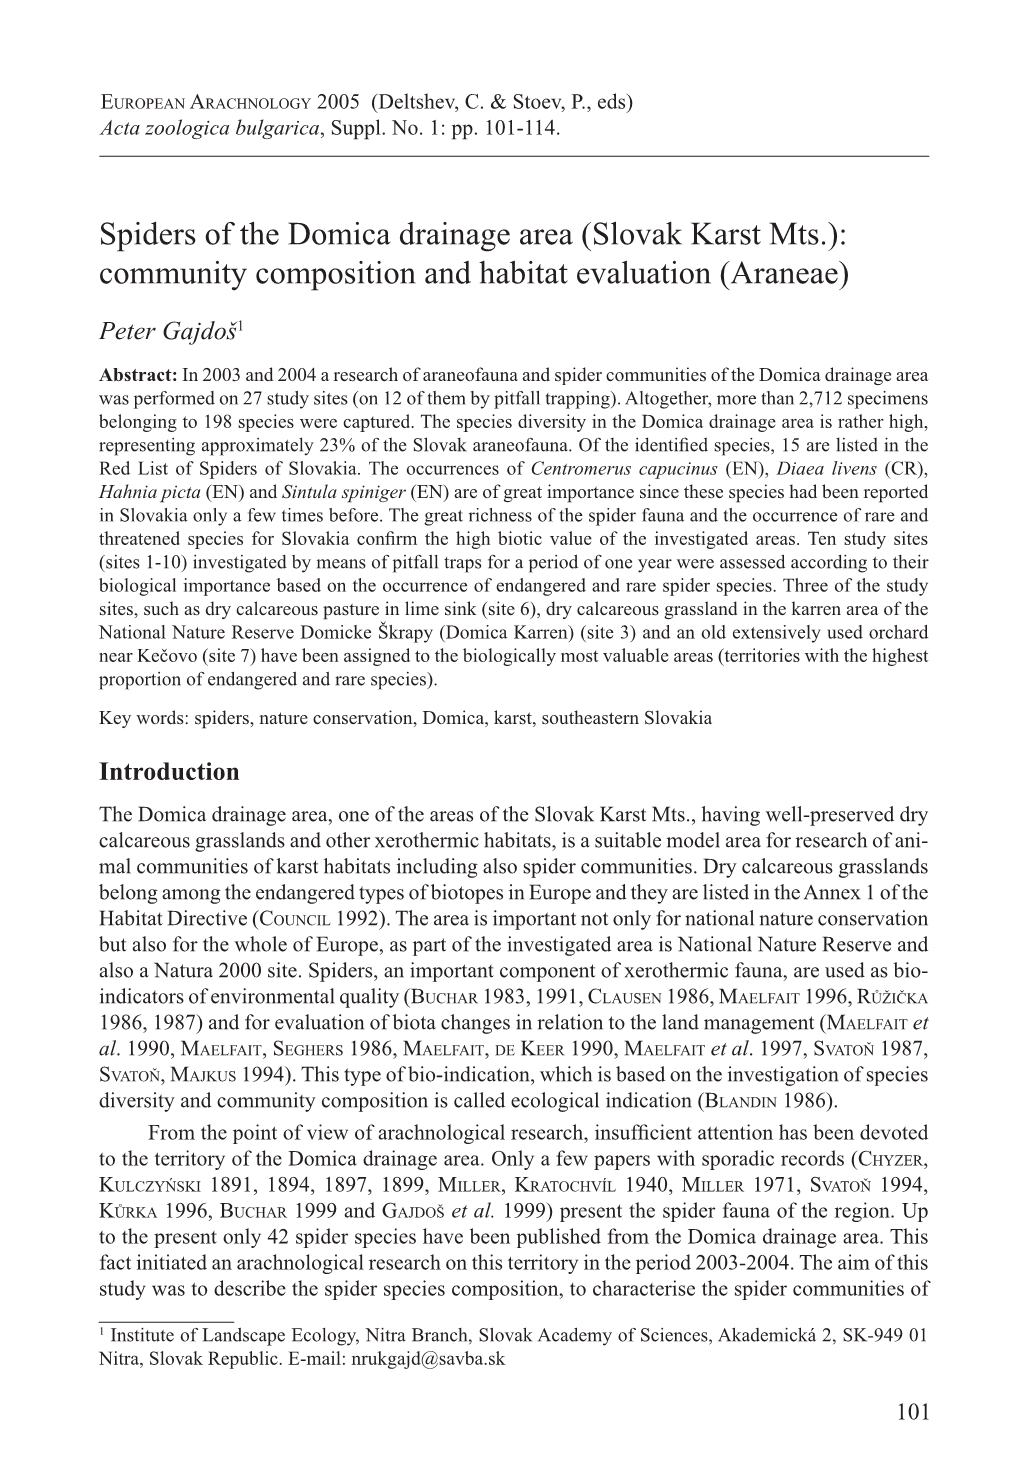 Spiders of the Domica Drainage Area (Slovak Karst Mts.): Community Composition and Habitat Evaluation (Araneae)